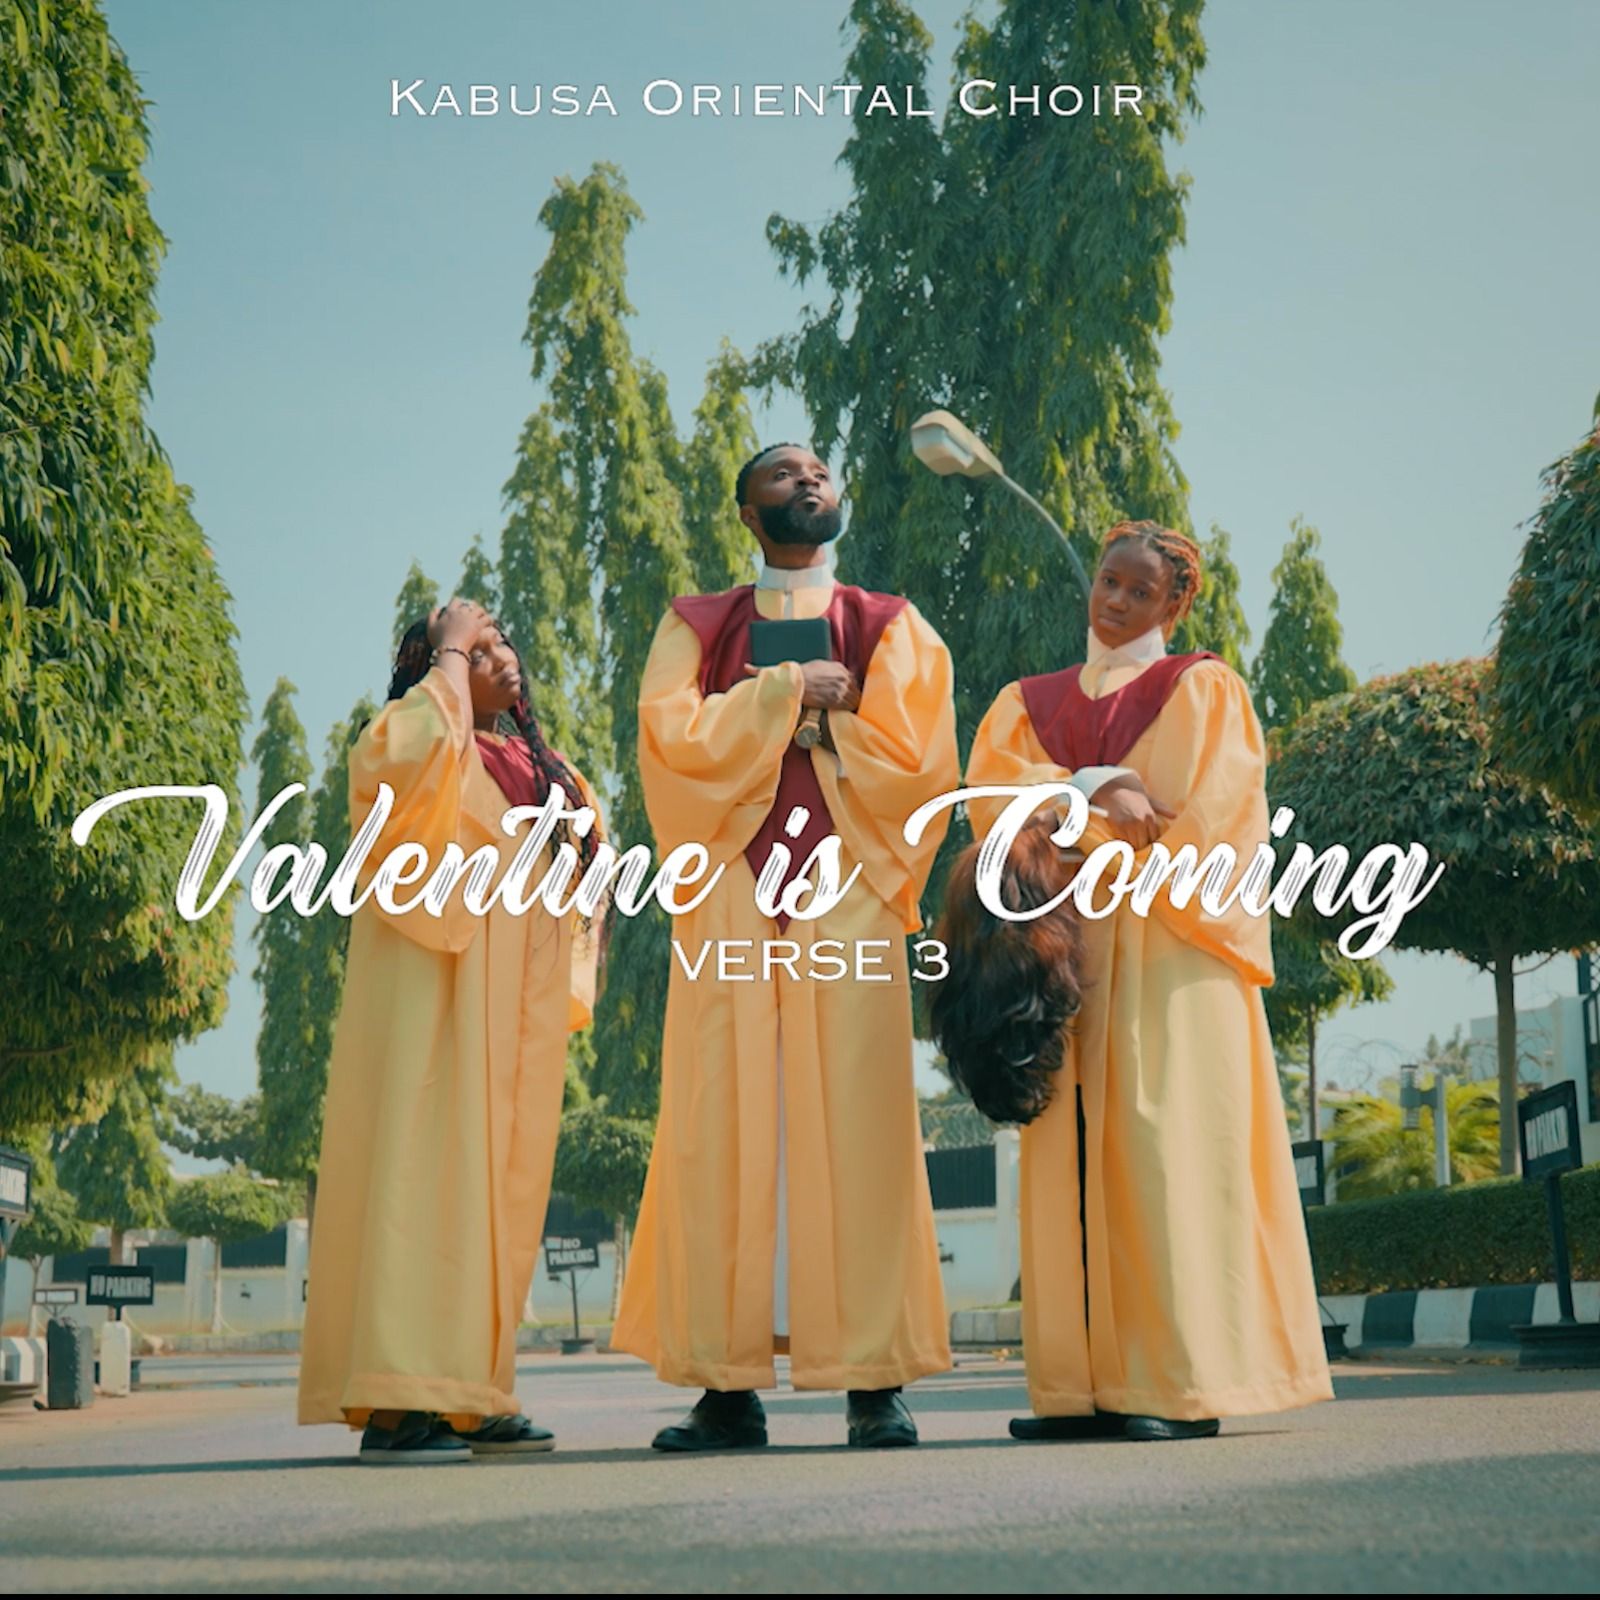 Kabusa Oriental Choir — Valentine is Coming Verse 3